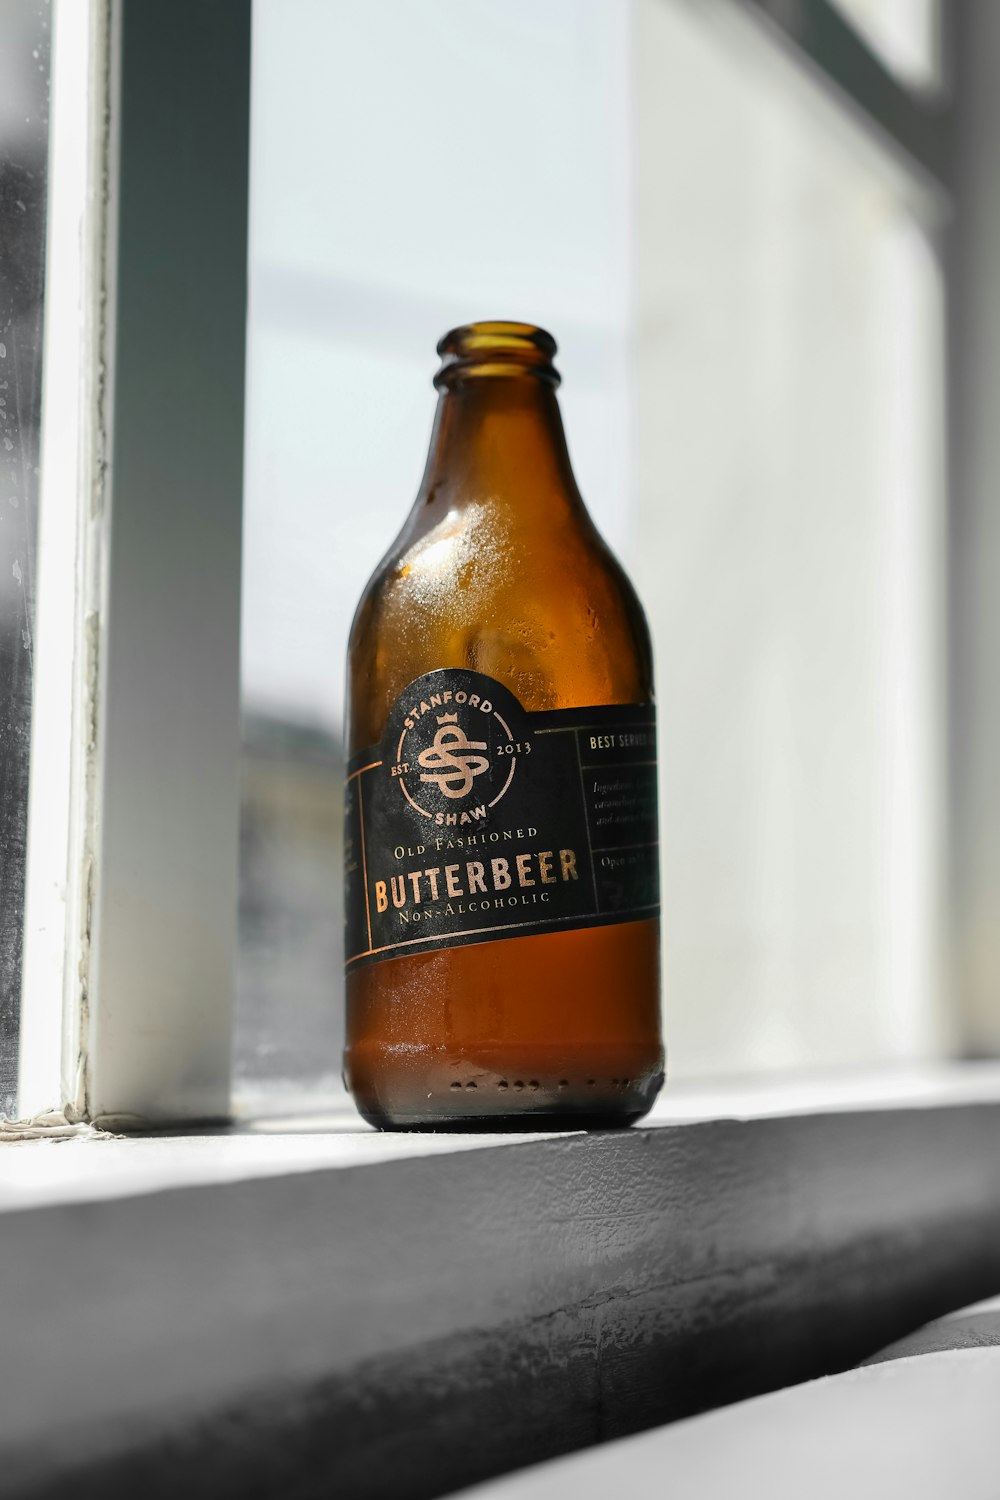 Butterbeer beer bottle on window sill